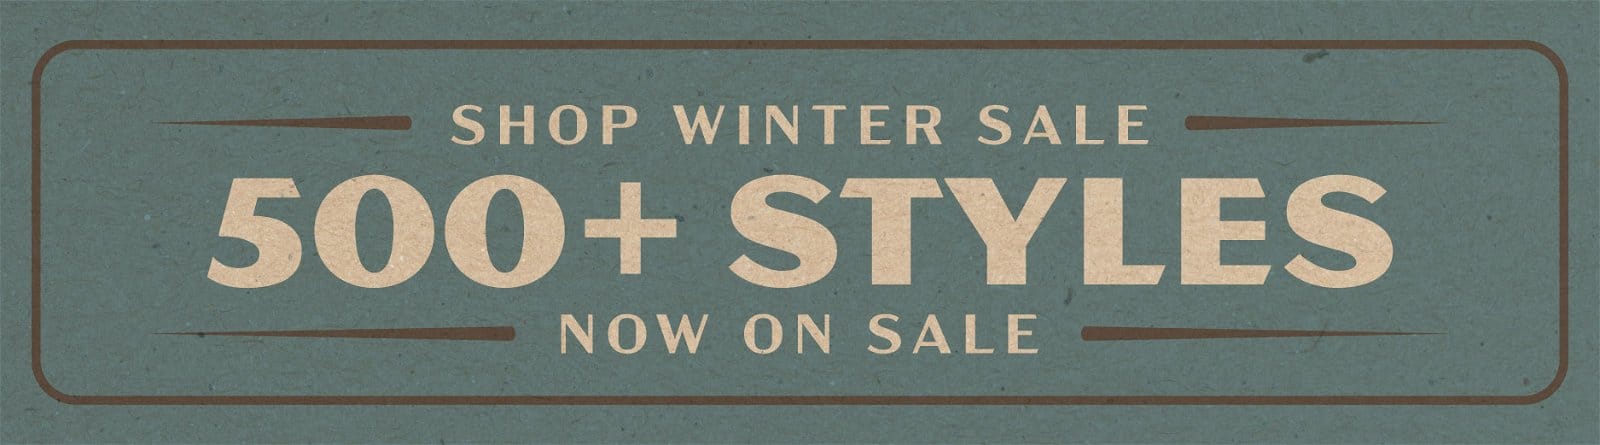 Winter Sale 500 Plus Styles